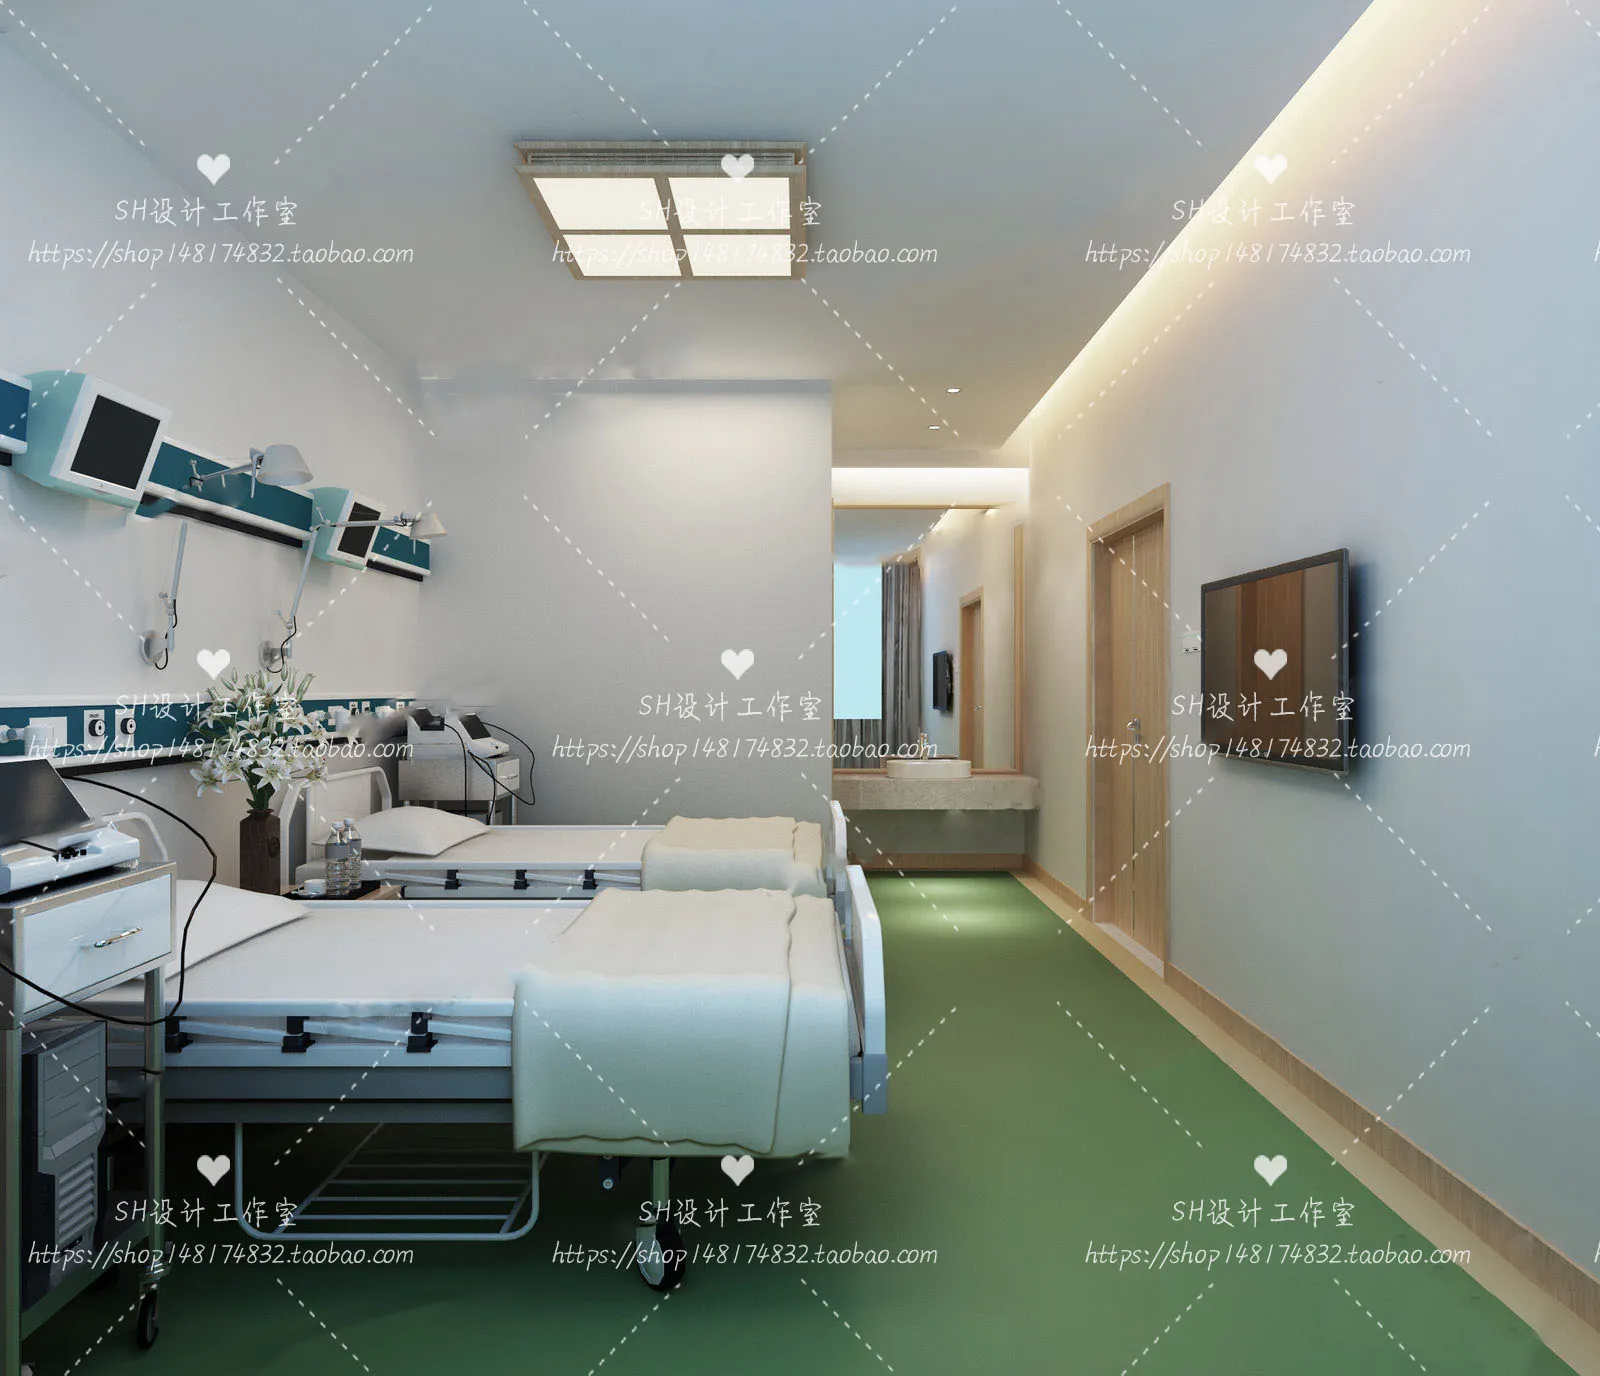 HOSPITAL 3D SCENES – VRAY RENDER – 014